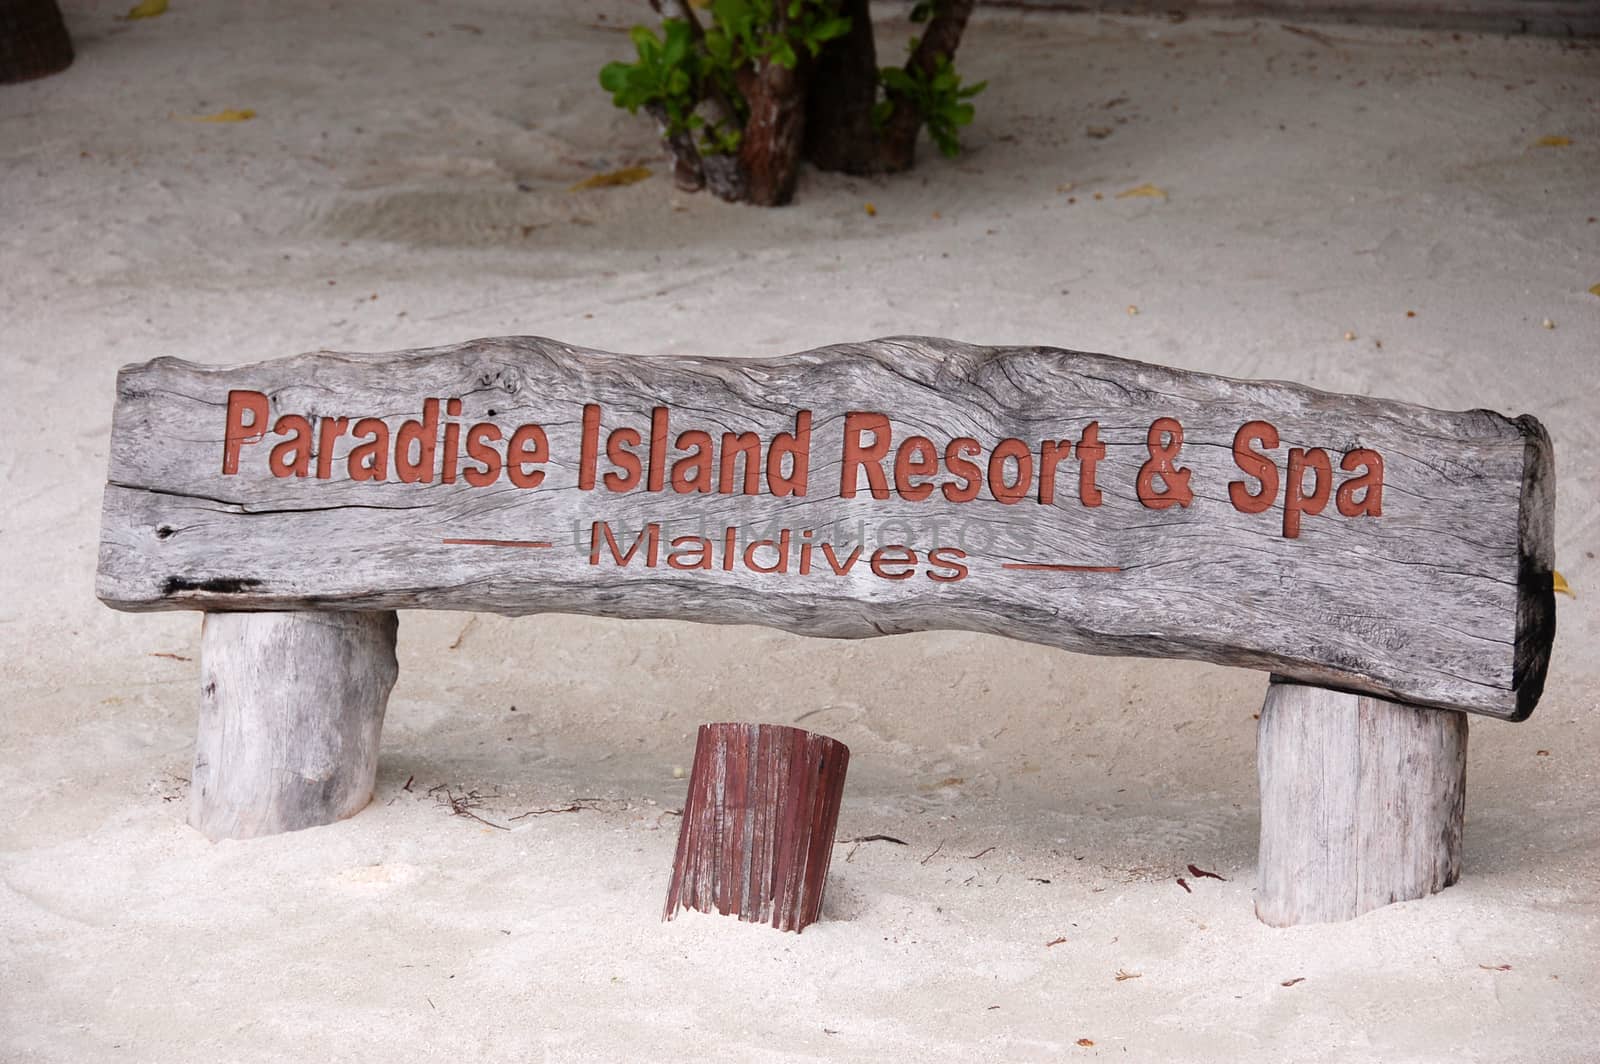 Paradise Island Resort timber name plate at sand beach, Maldives